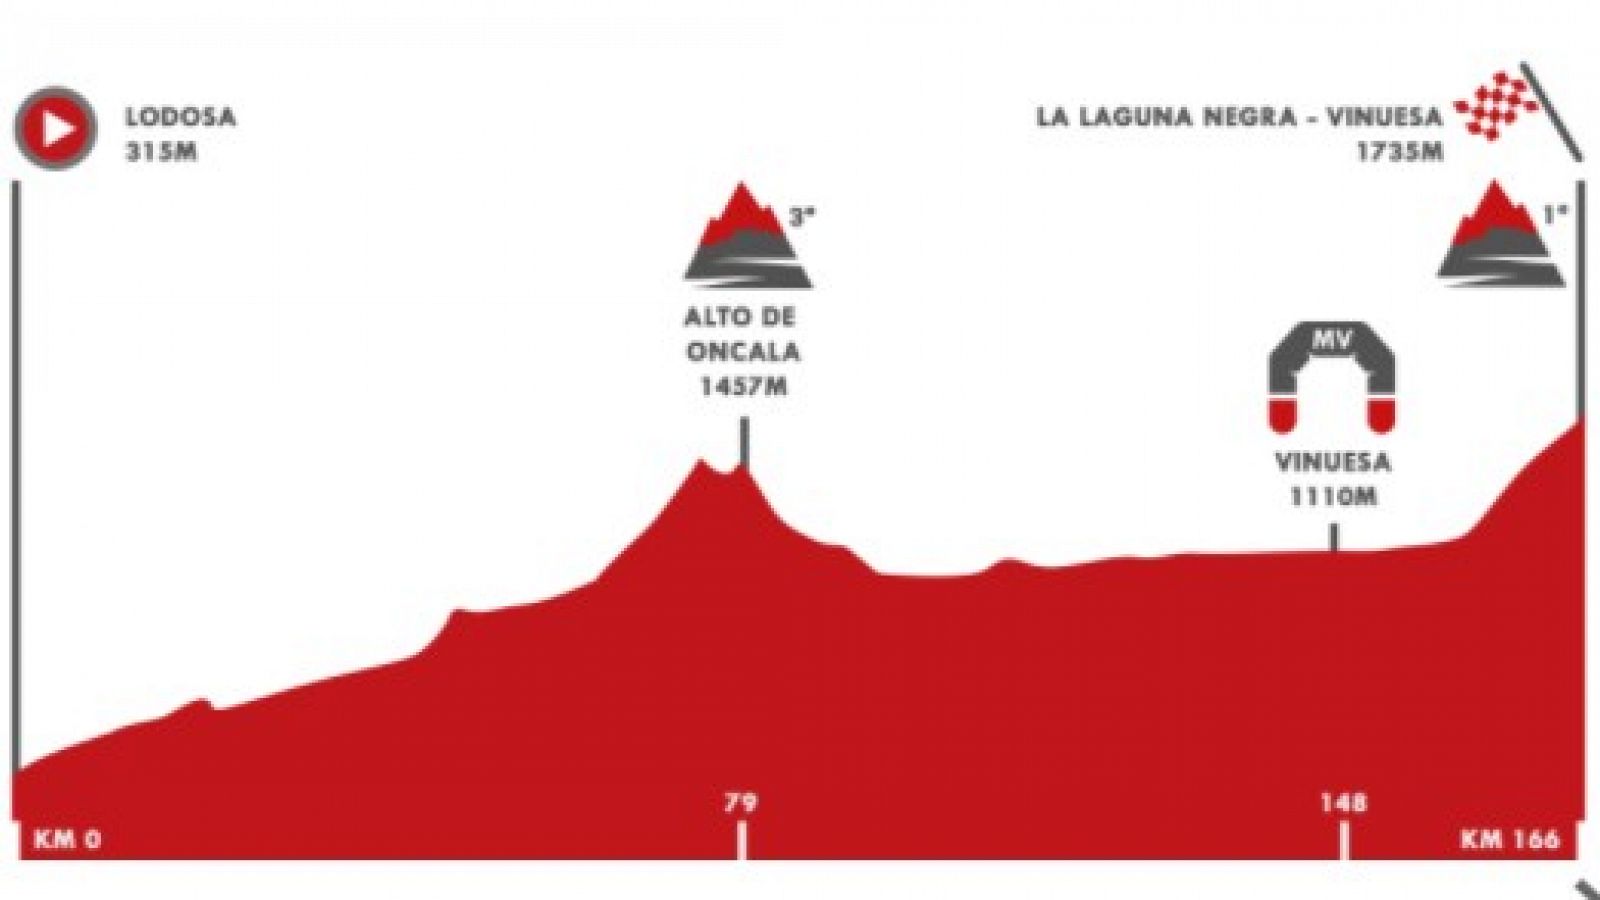 Vuelta 2020 | Perfil etapa 3: Lodosa - La Laguna Negra